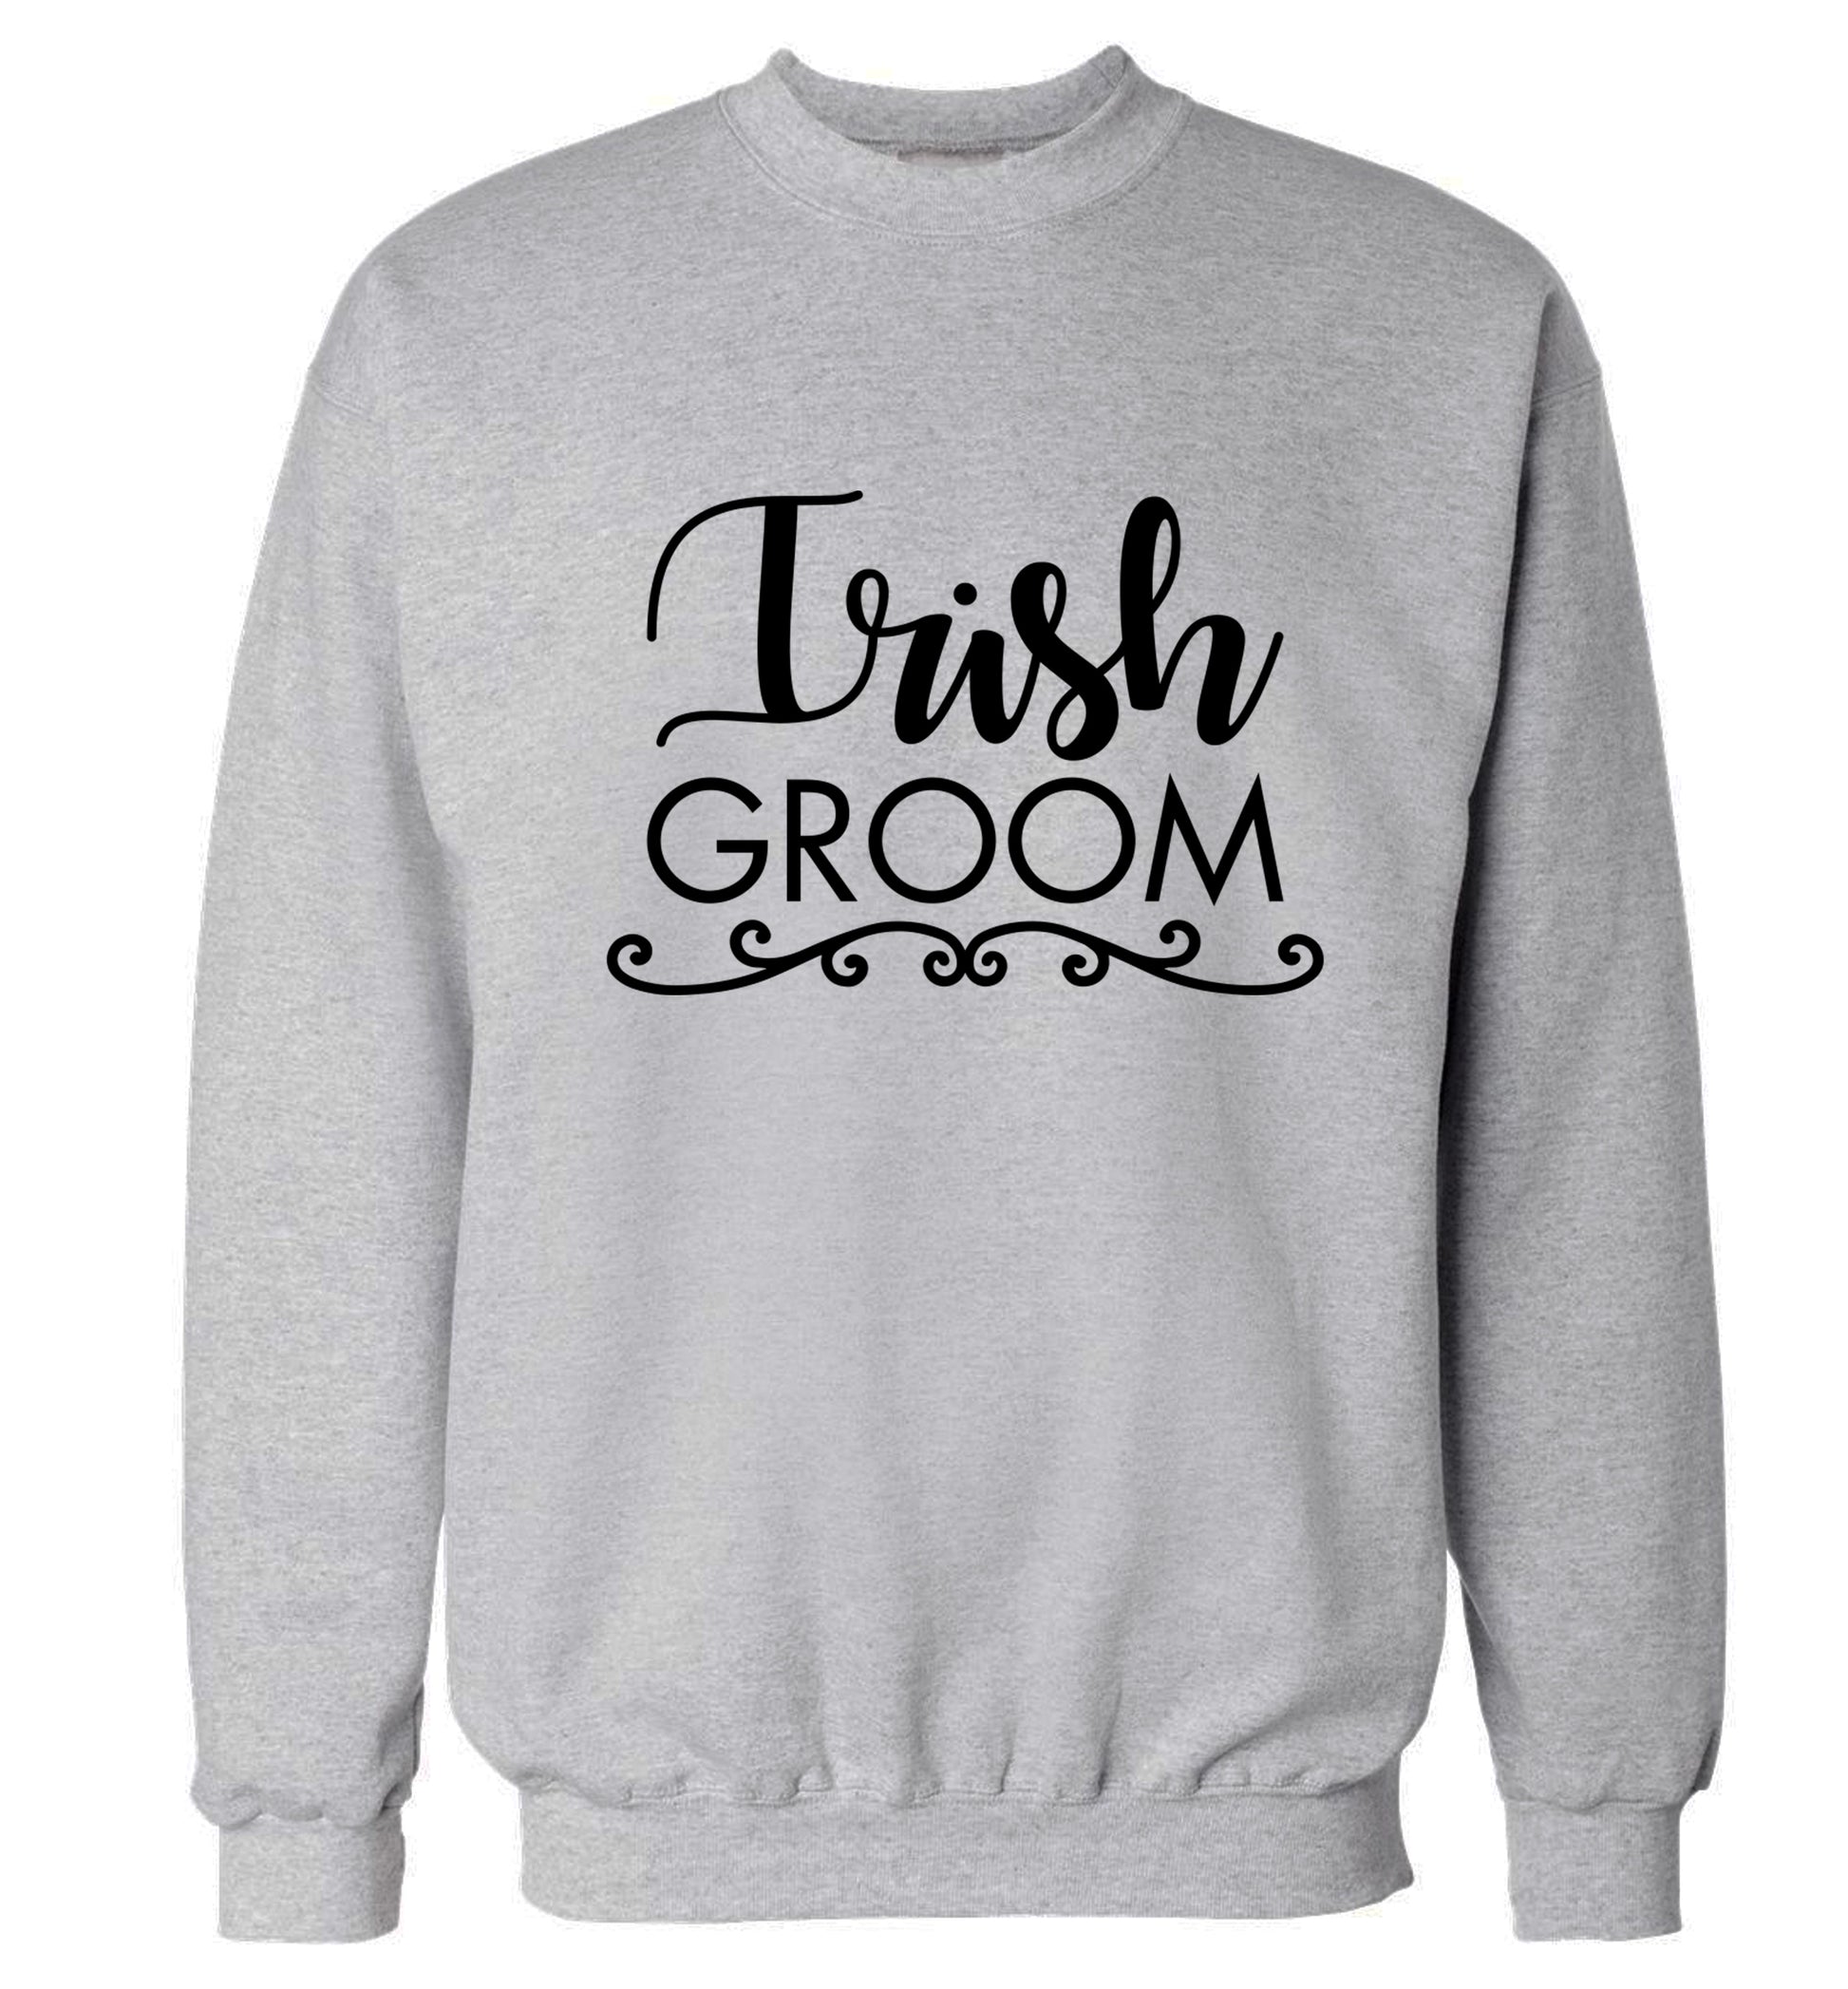 Irish groom Adult's unisex grey Sweater 2XL